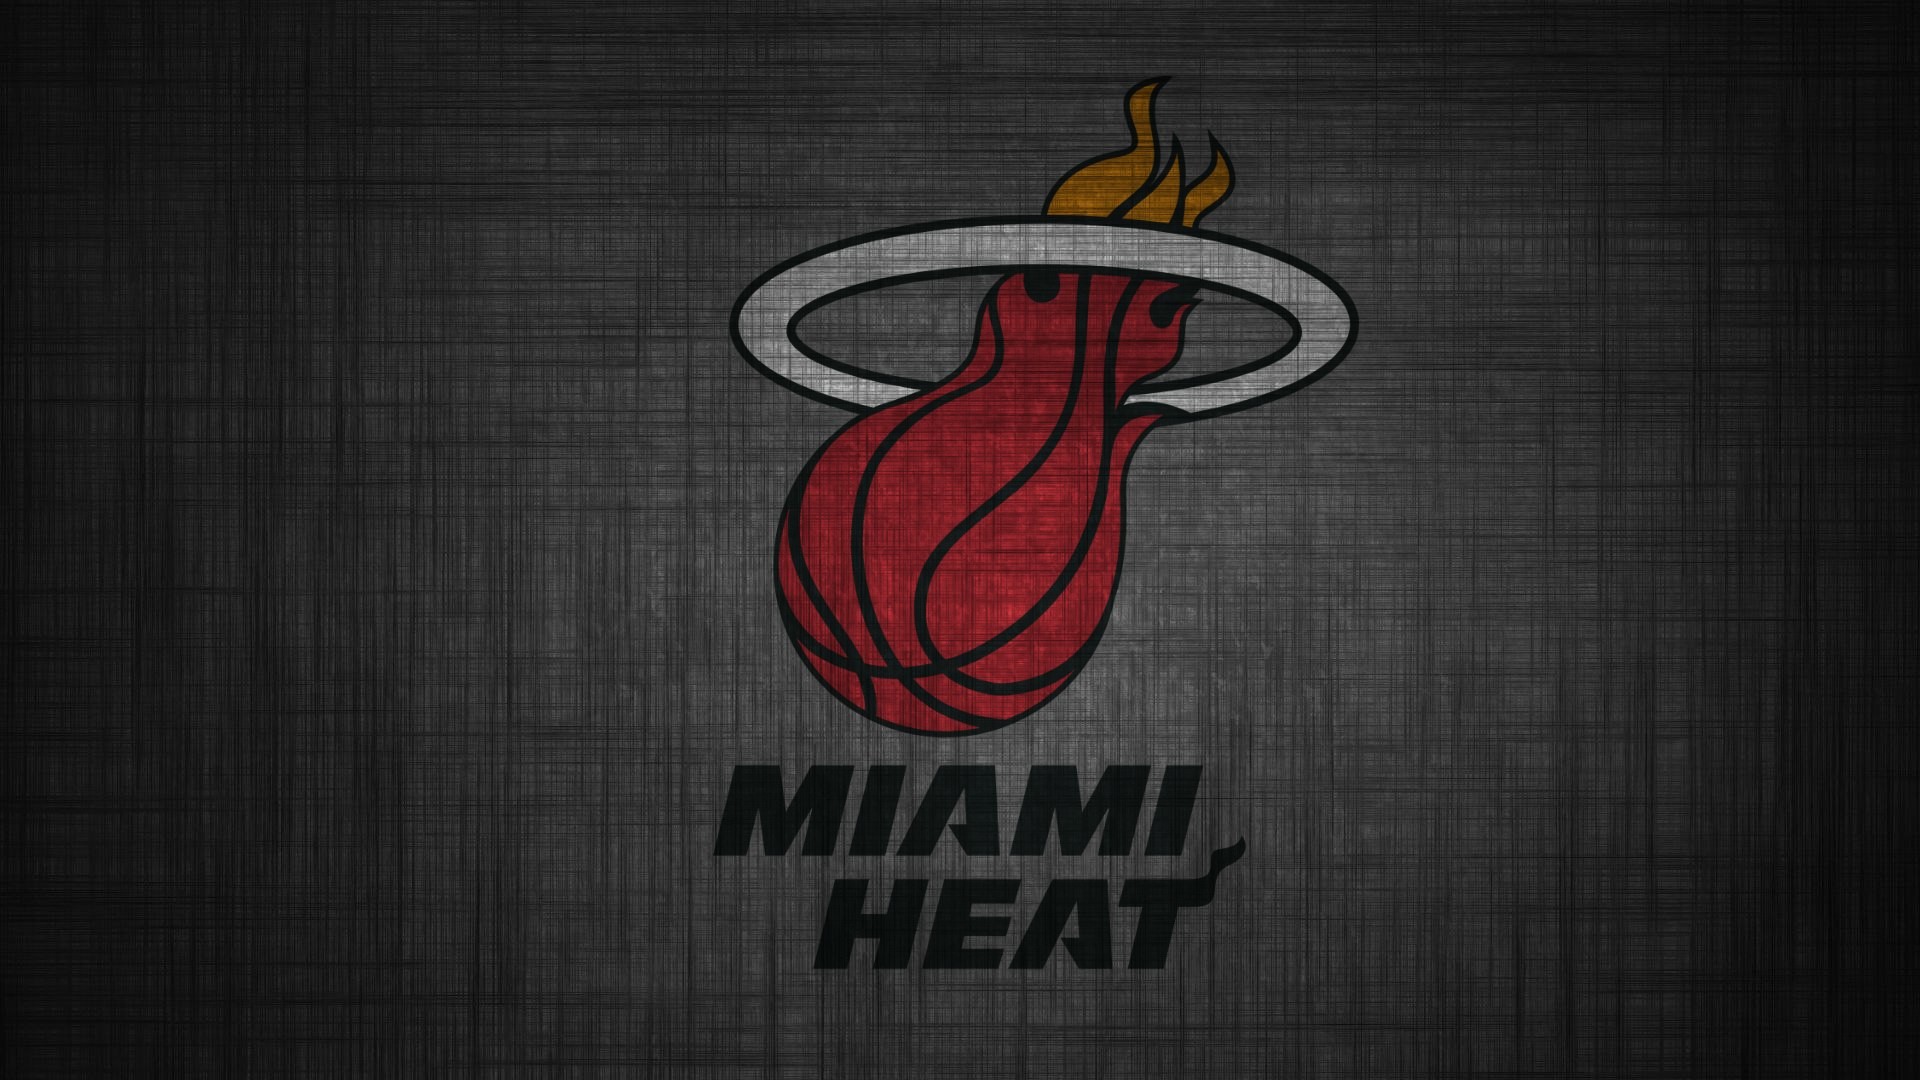 62+] Miami Heat Hd Wallpapers - WallpaperSafari